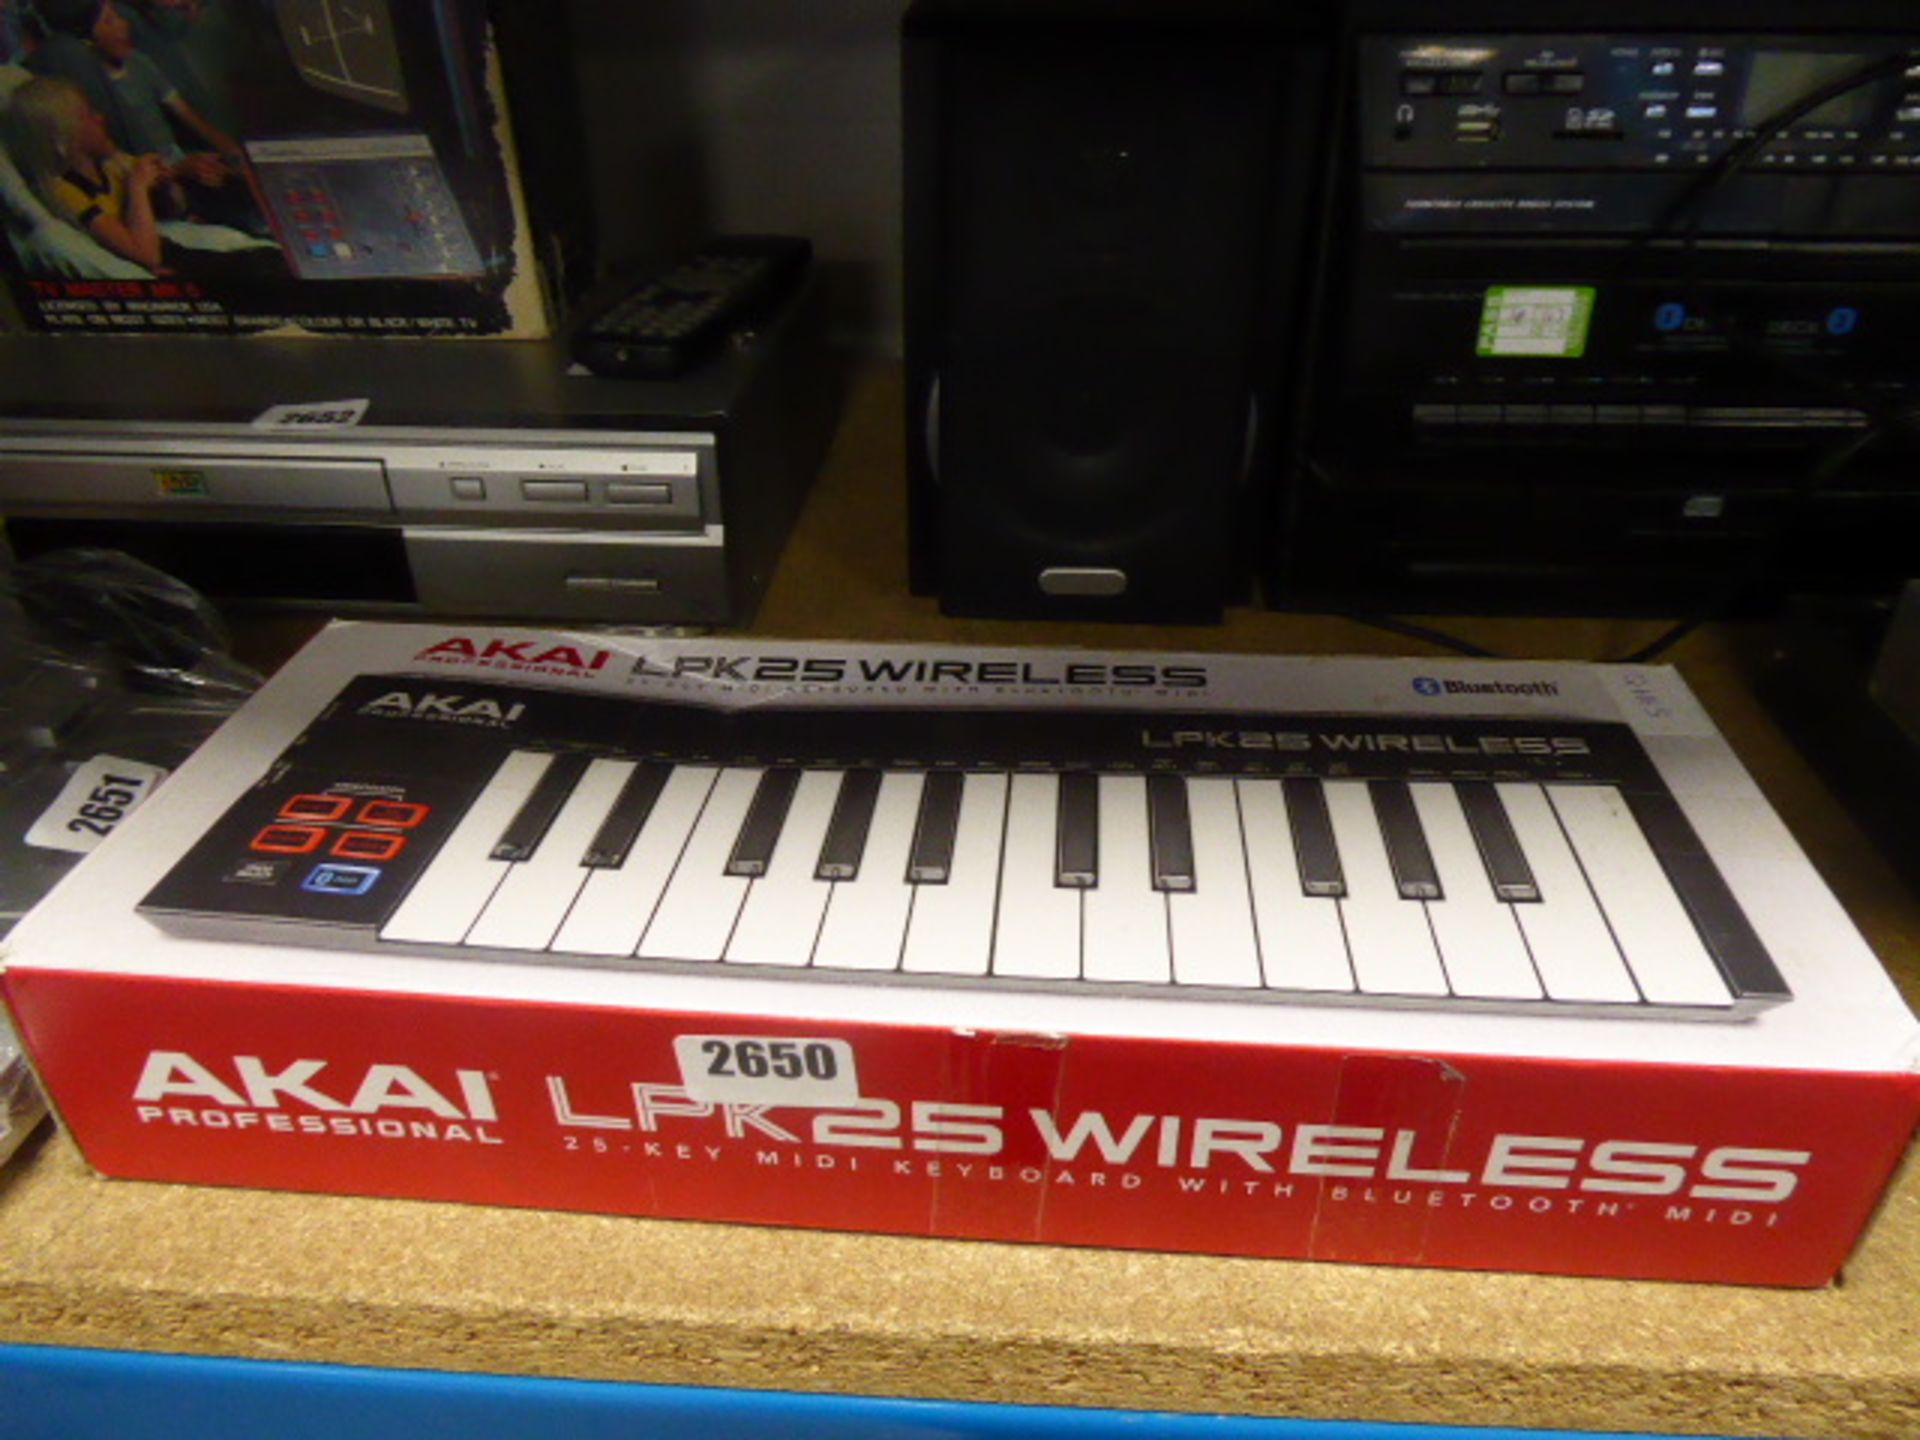 Akai LPK25 wireless bluetooth keyboard